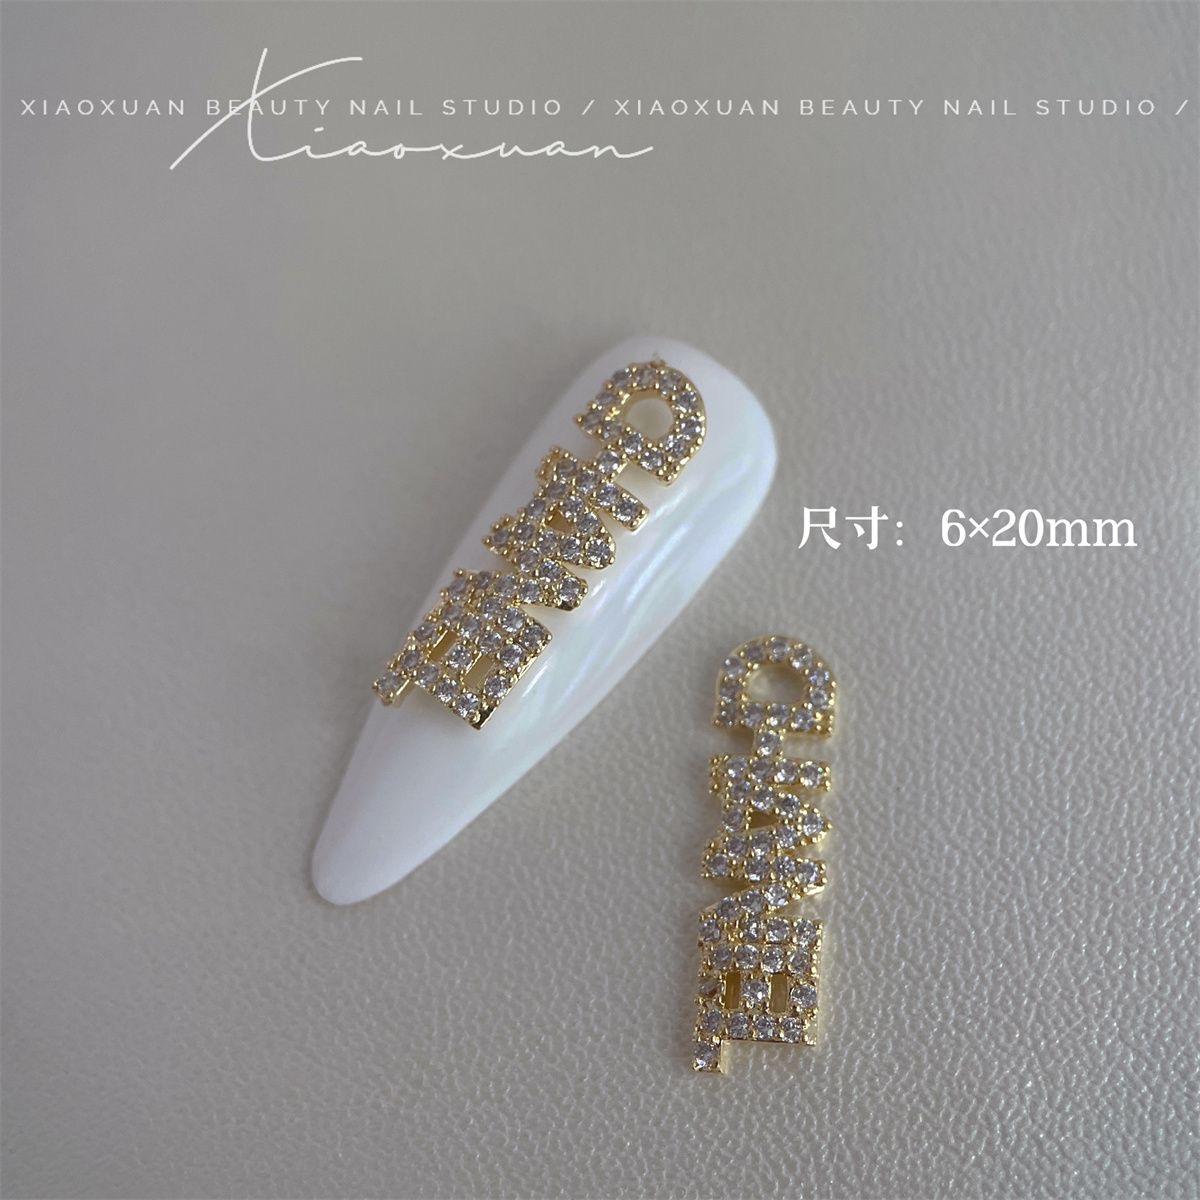 chanel nail charms gold2